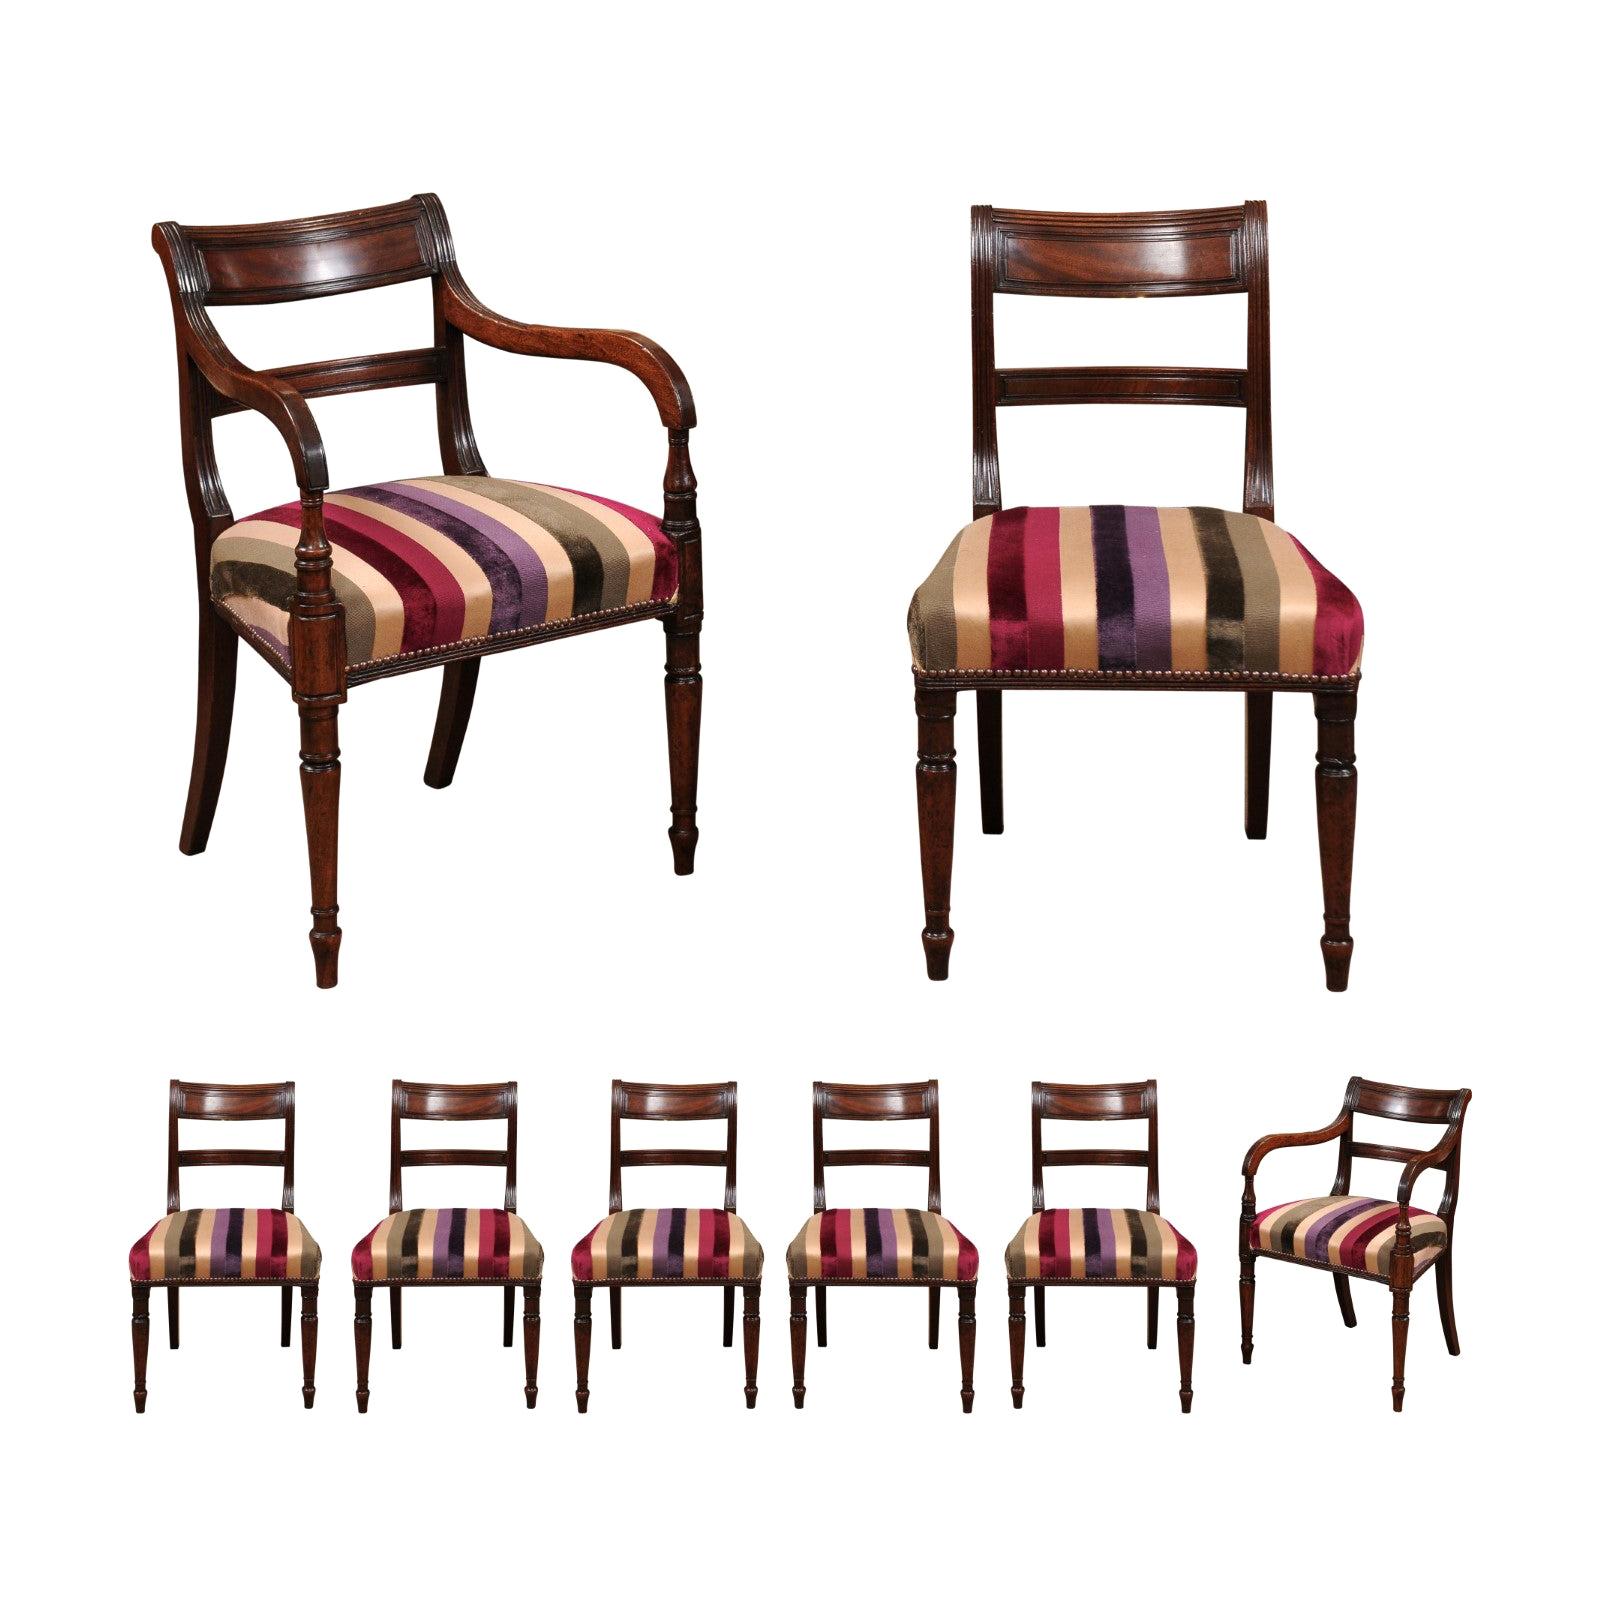 Set of 8 Regency Mahogany Dining Chairs, Early 19th Century, England